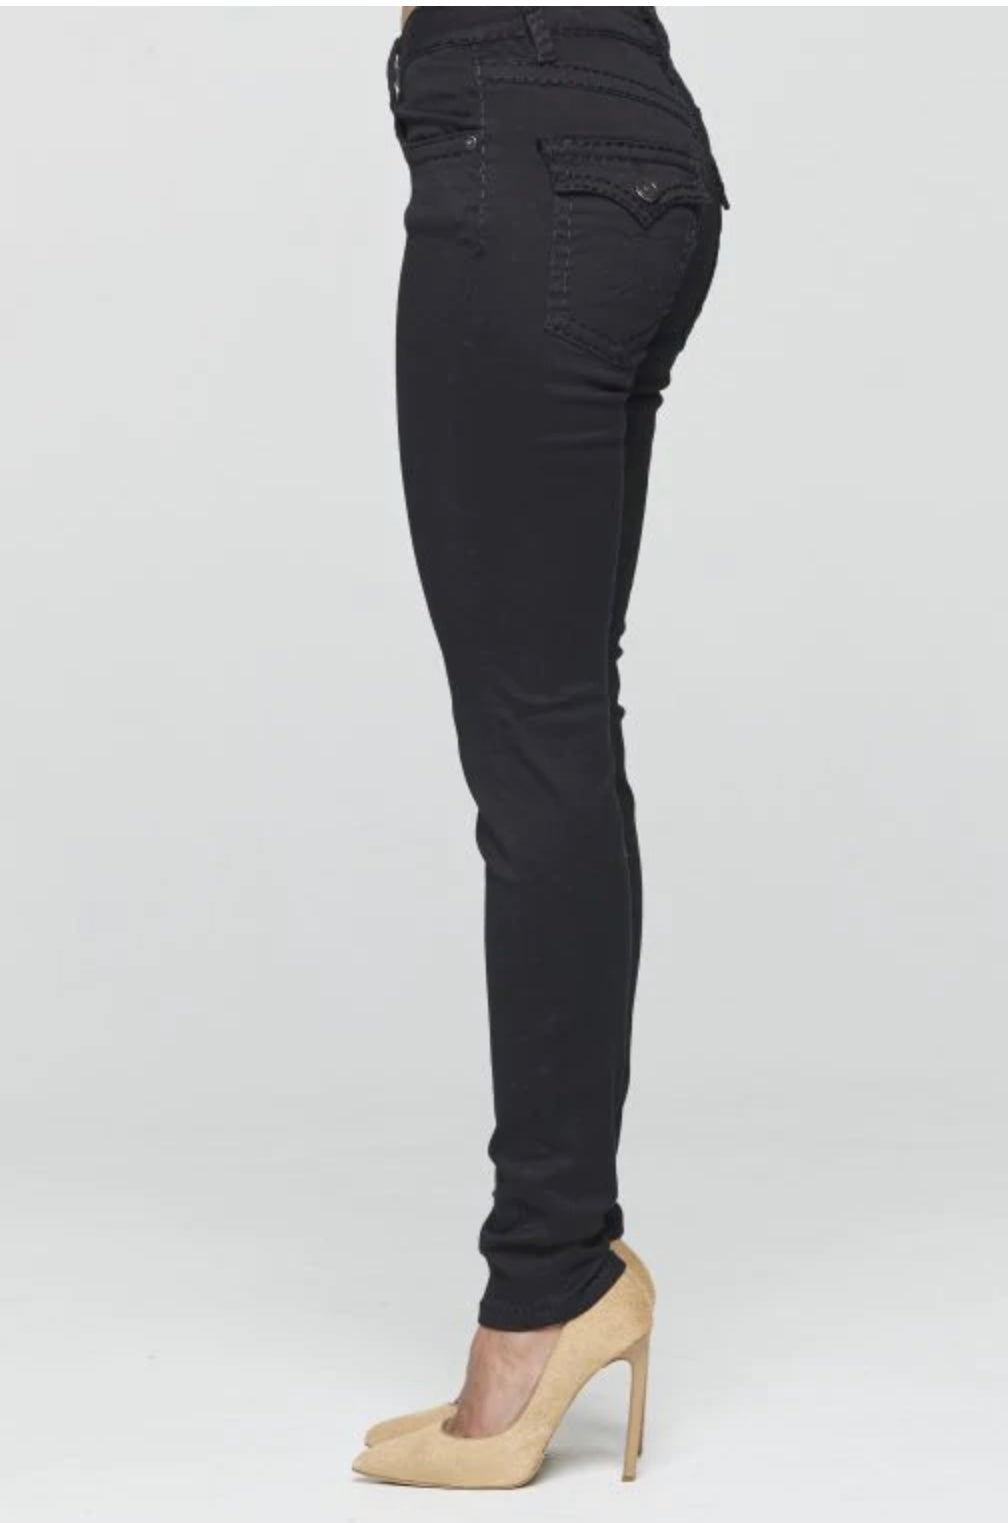 New London Jeans Chelsea Black